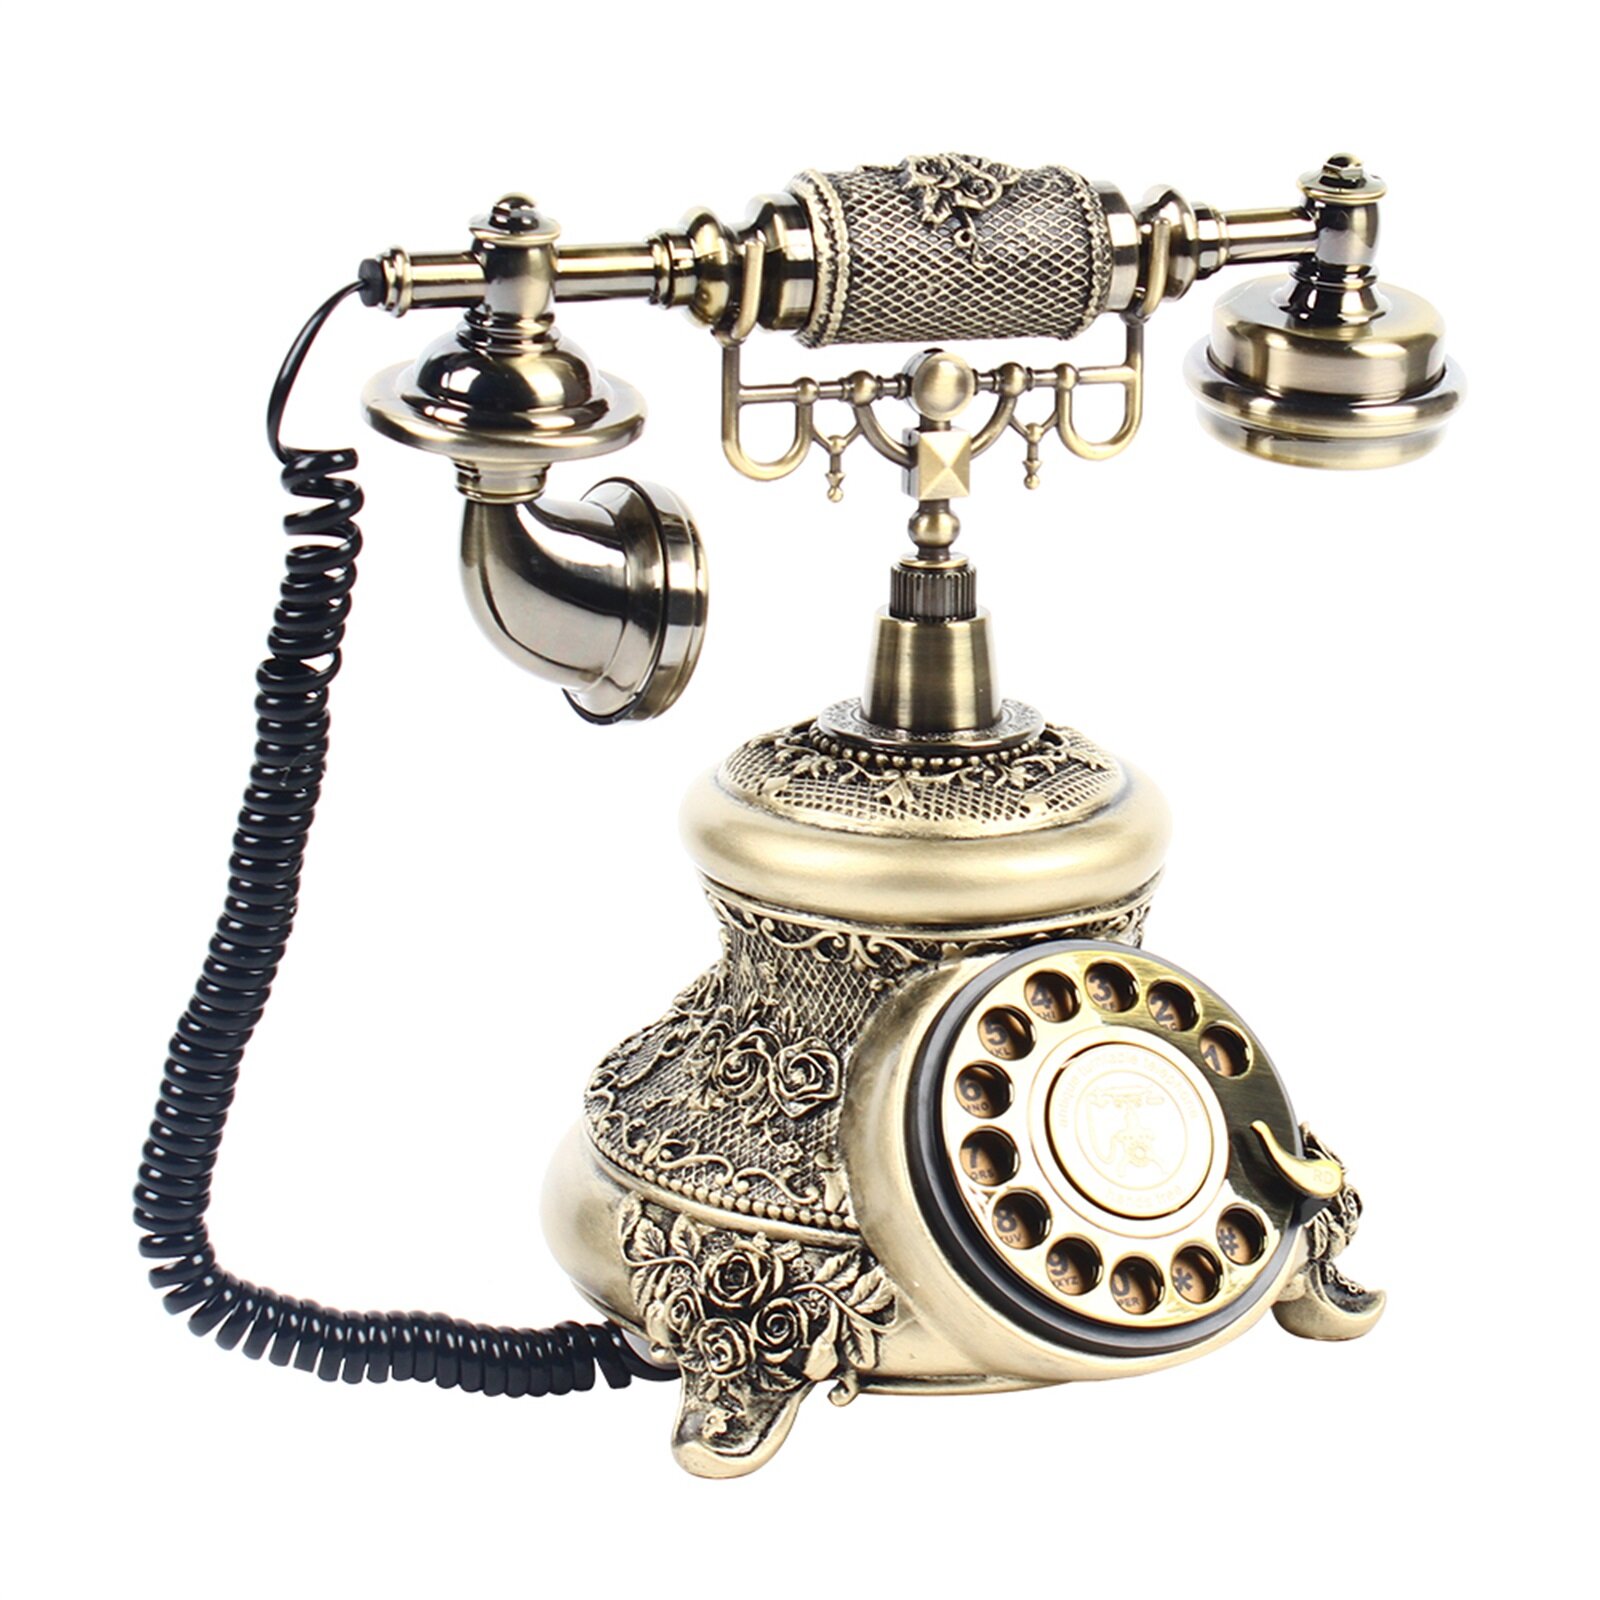 European Style Bronze Antique Telephone Rotary Dial Desk Phone Home Decor Gift 